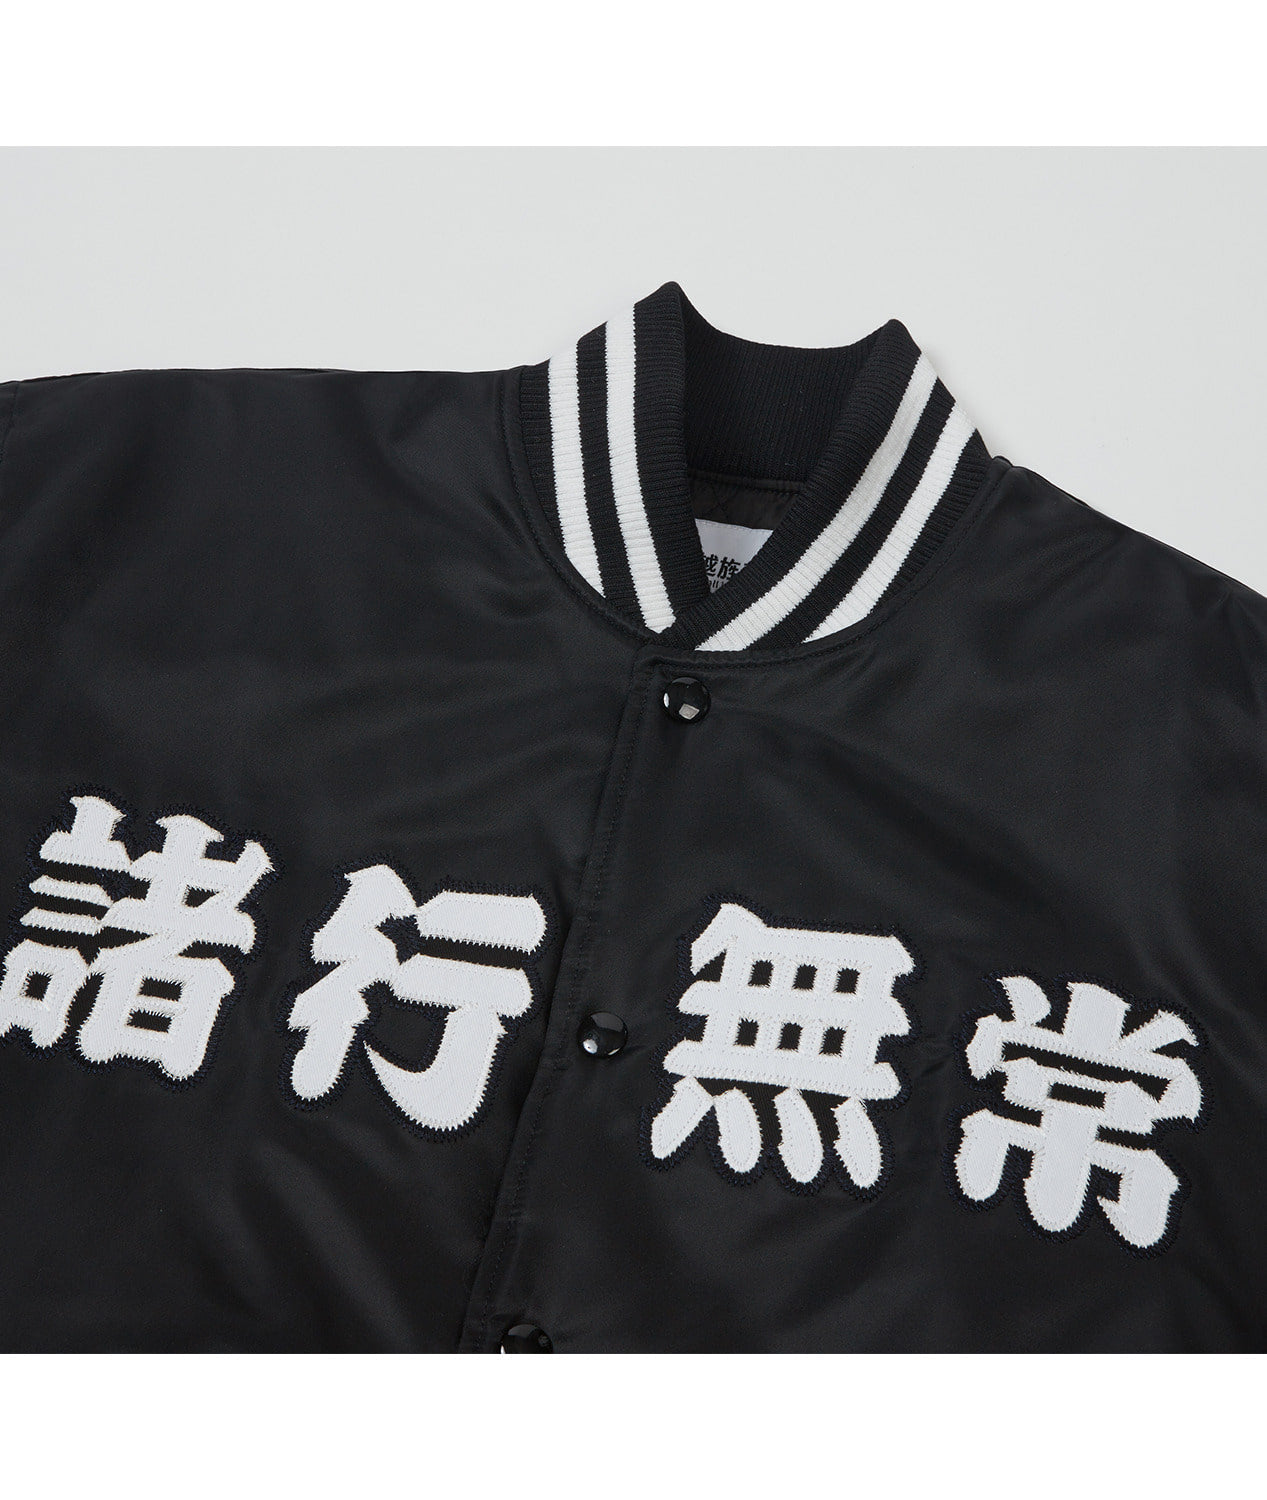 Anicca Club Baseball Jacket - Black